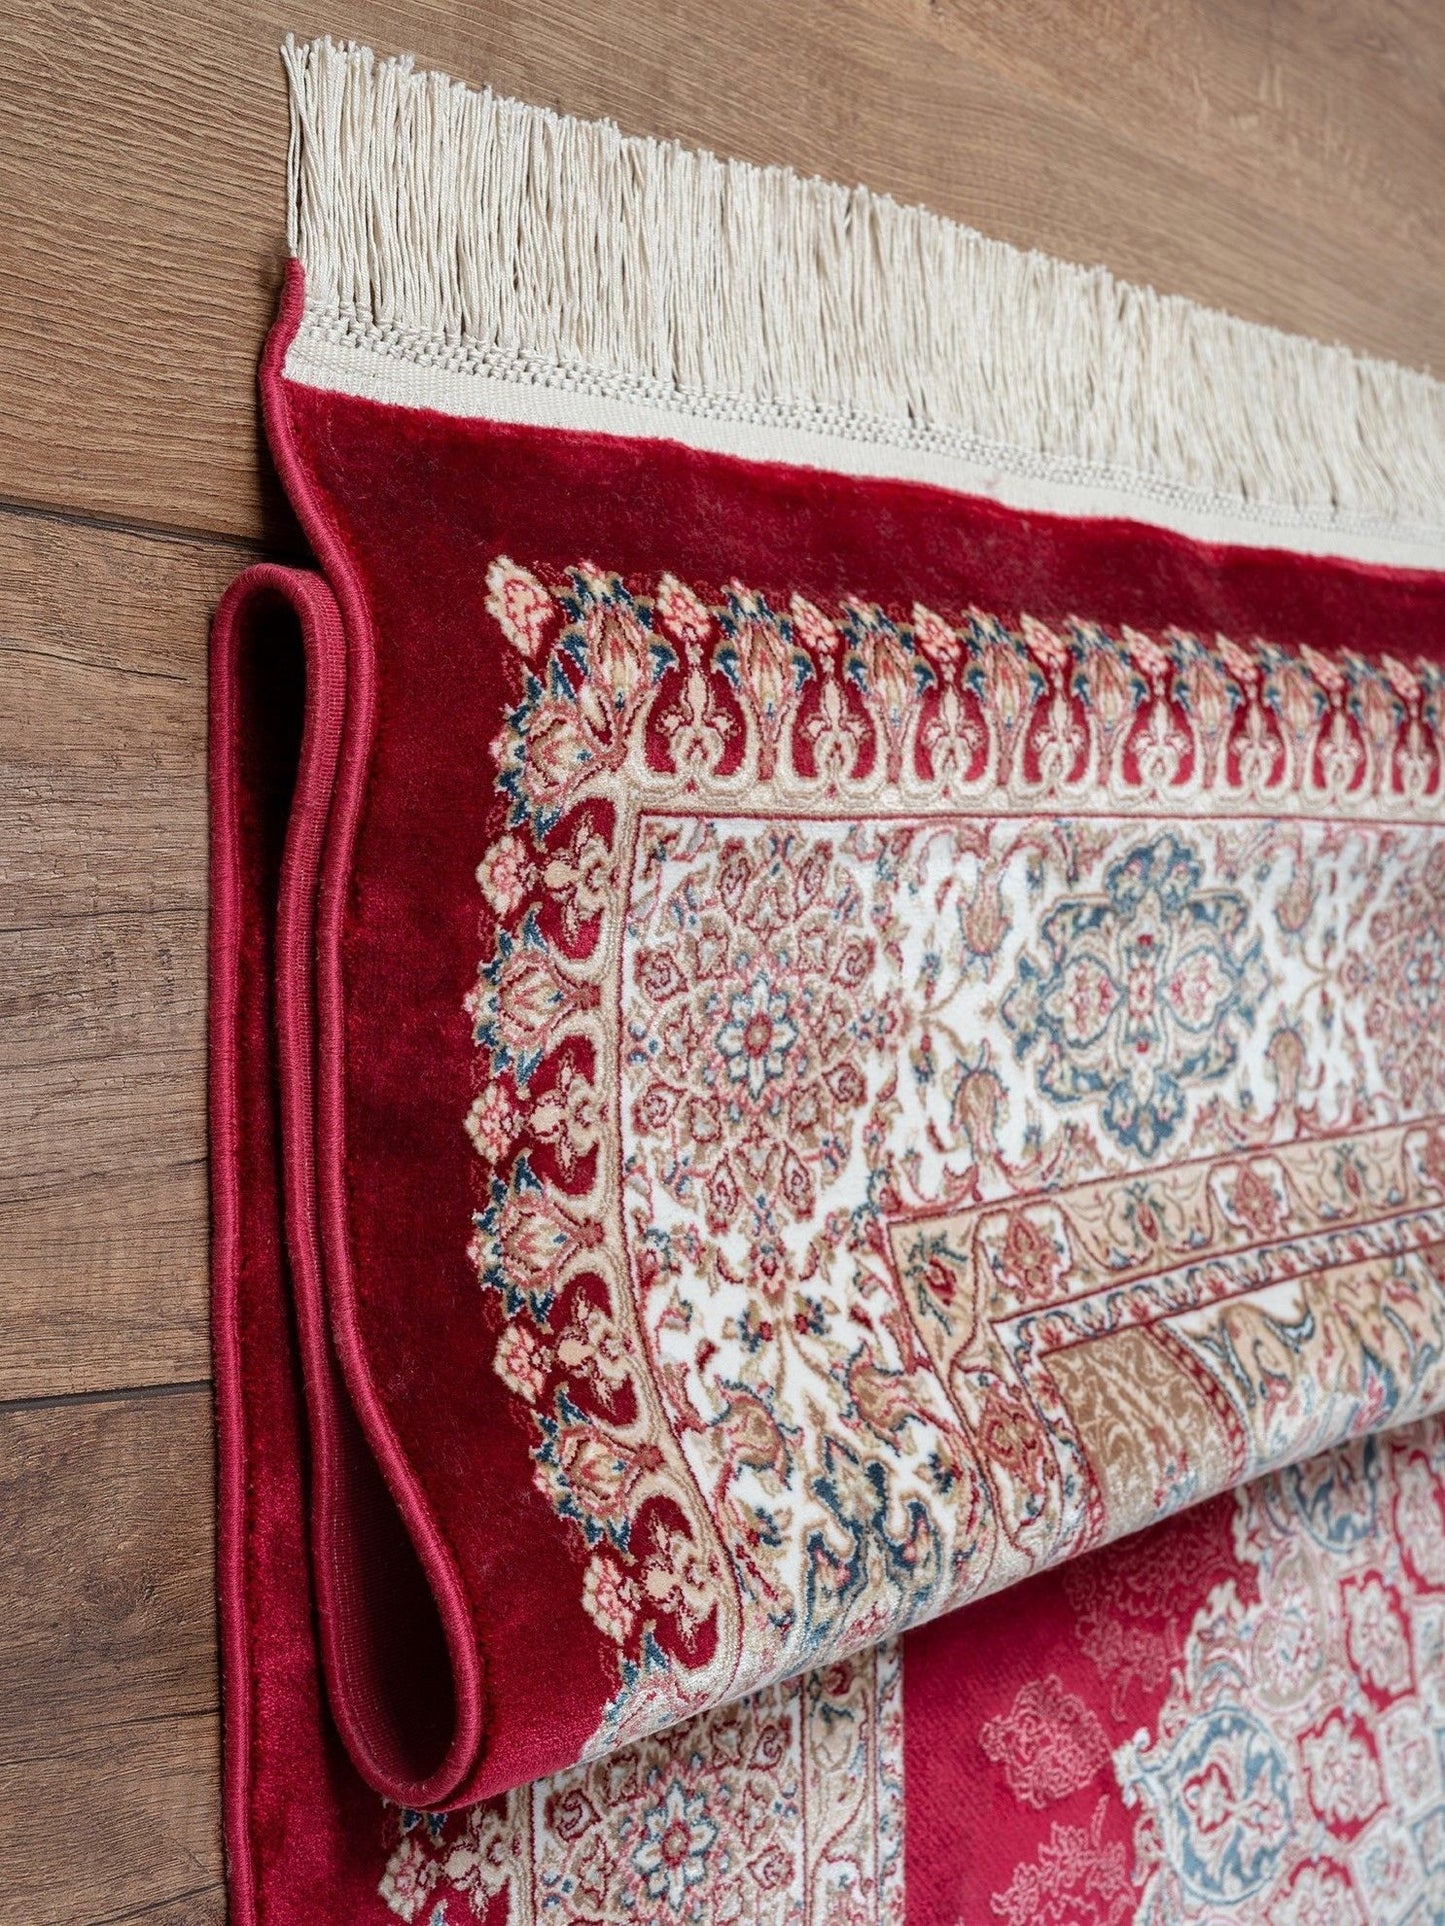 Silkas 6701 - Carpet (160 x 230)